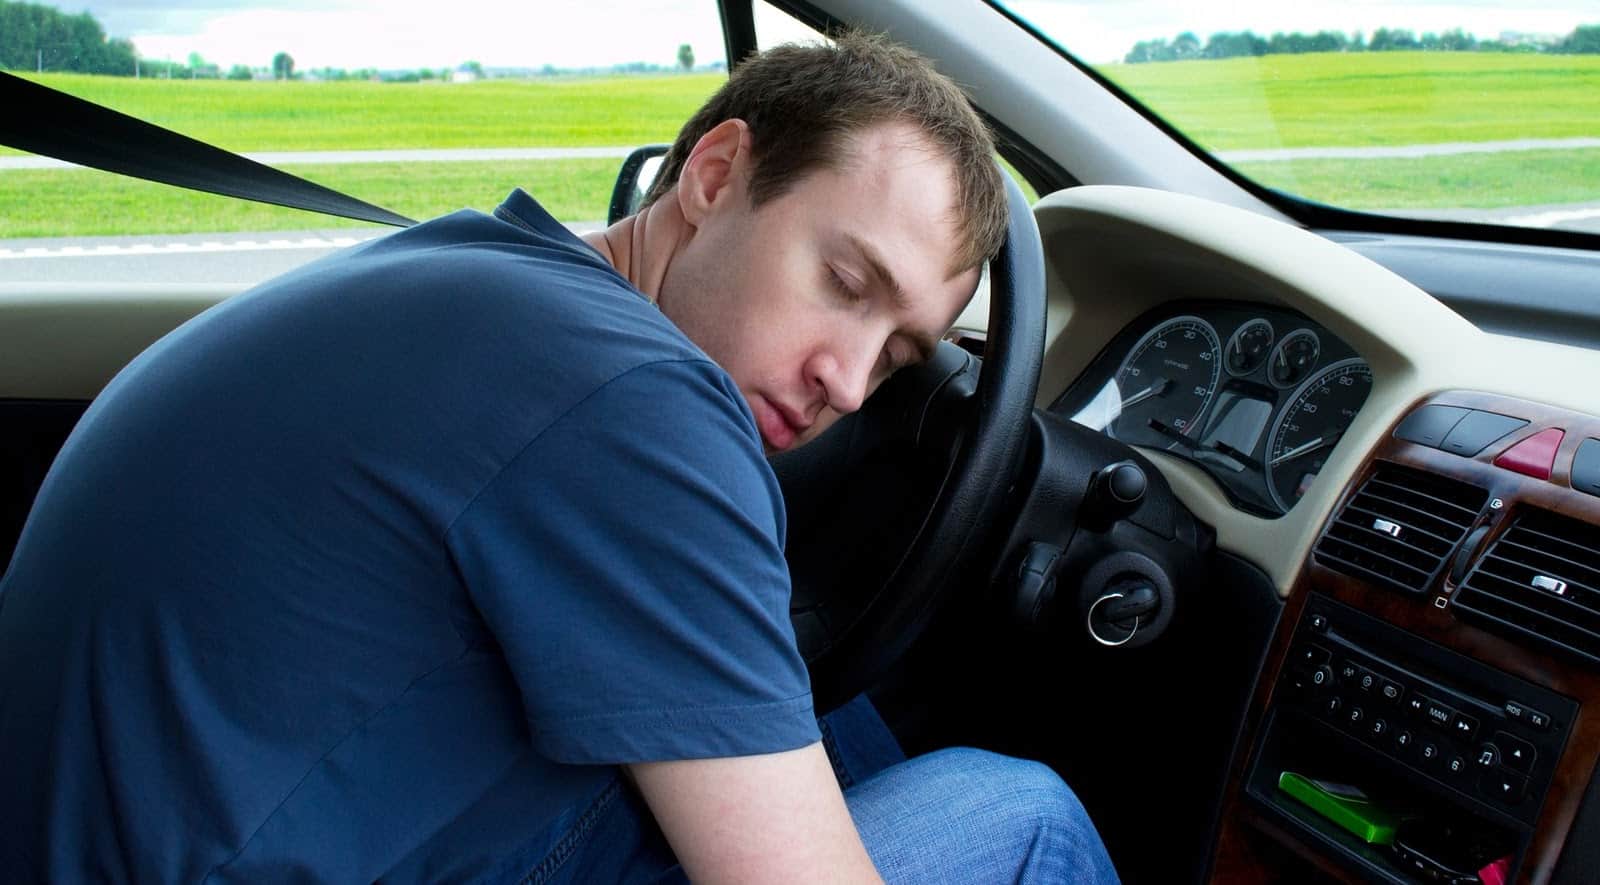 Young Man Sleeps In Car